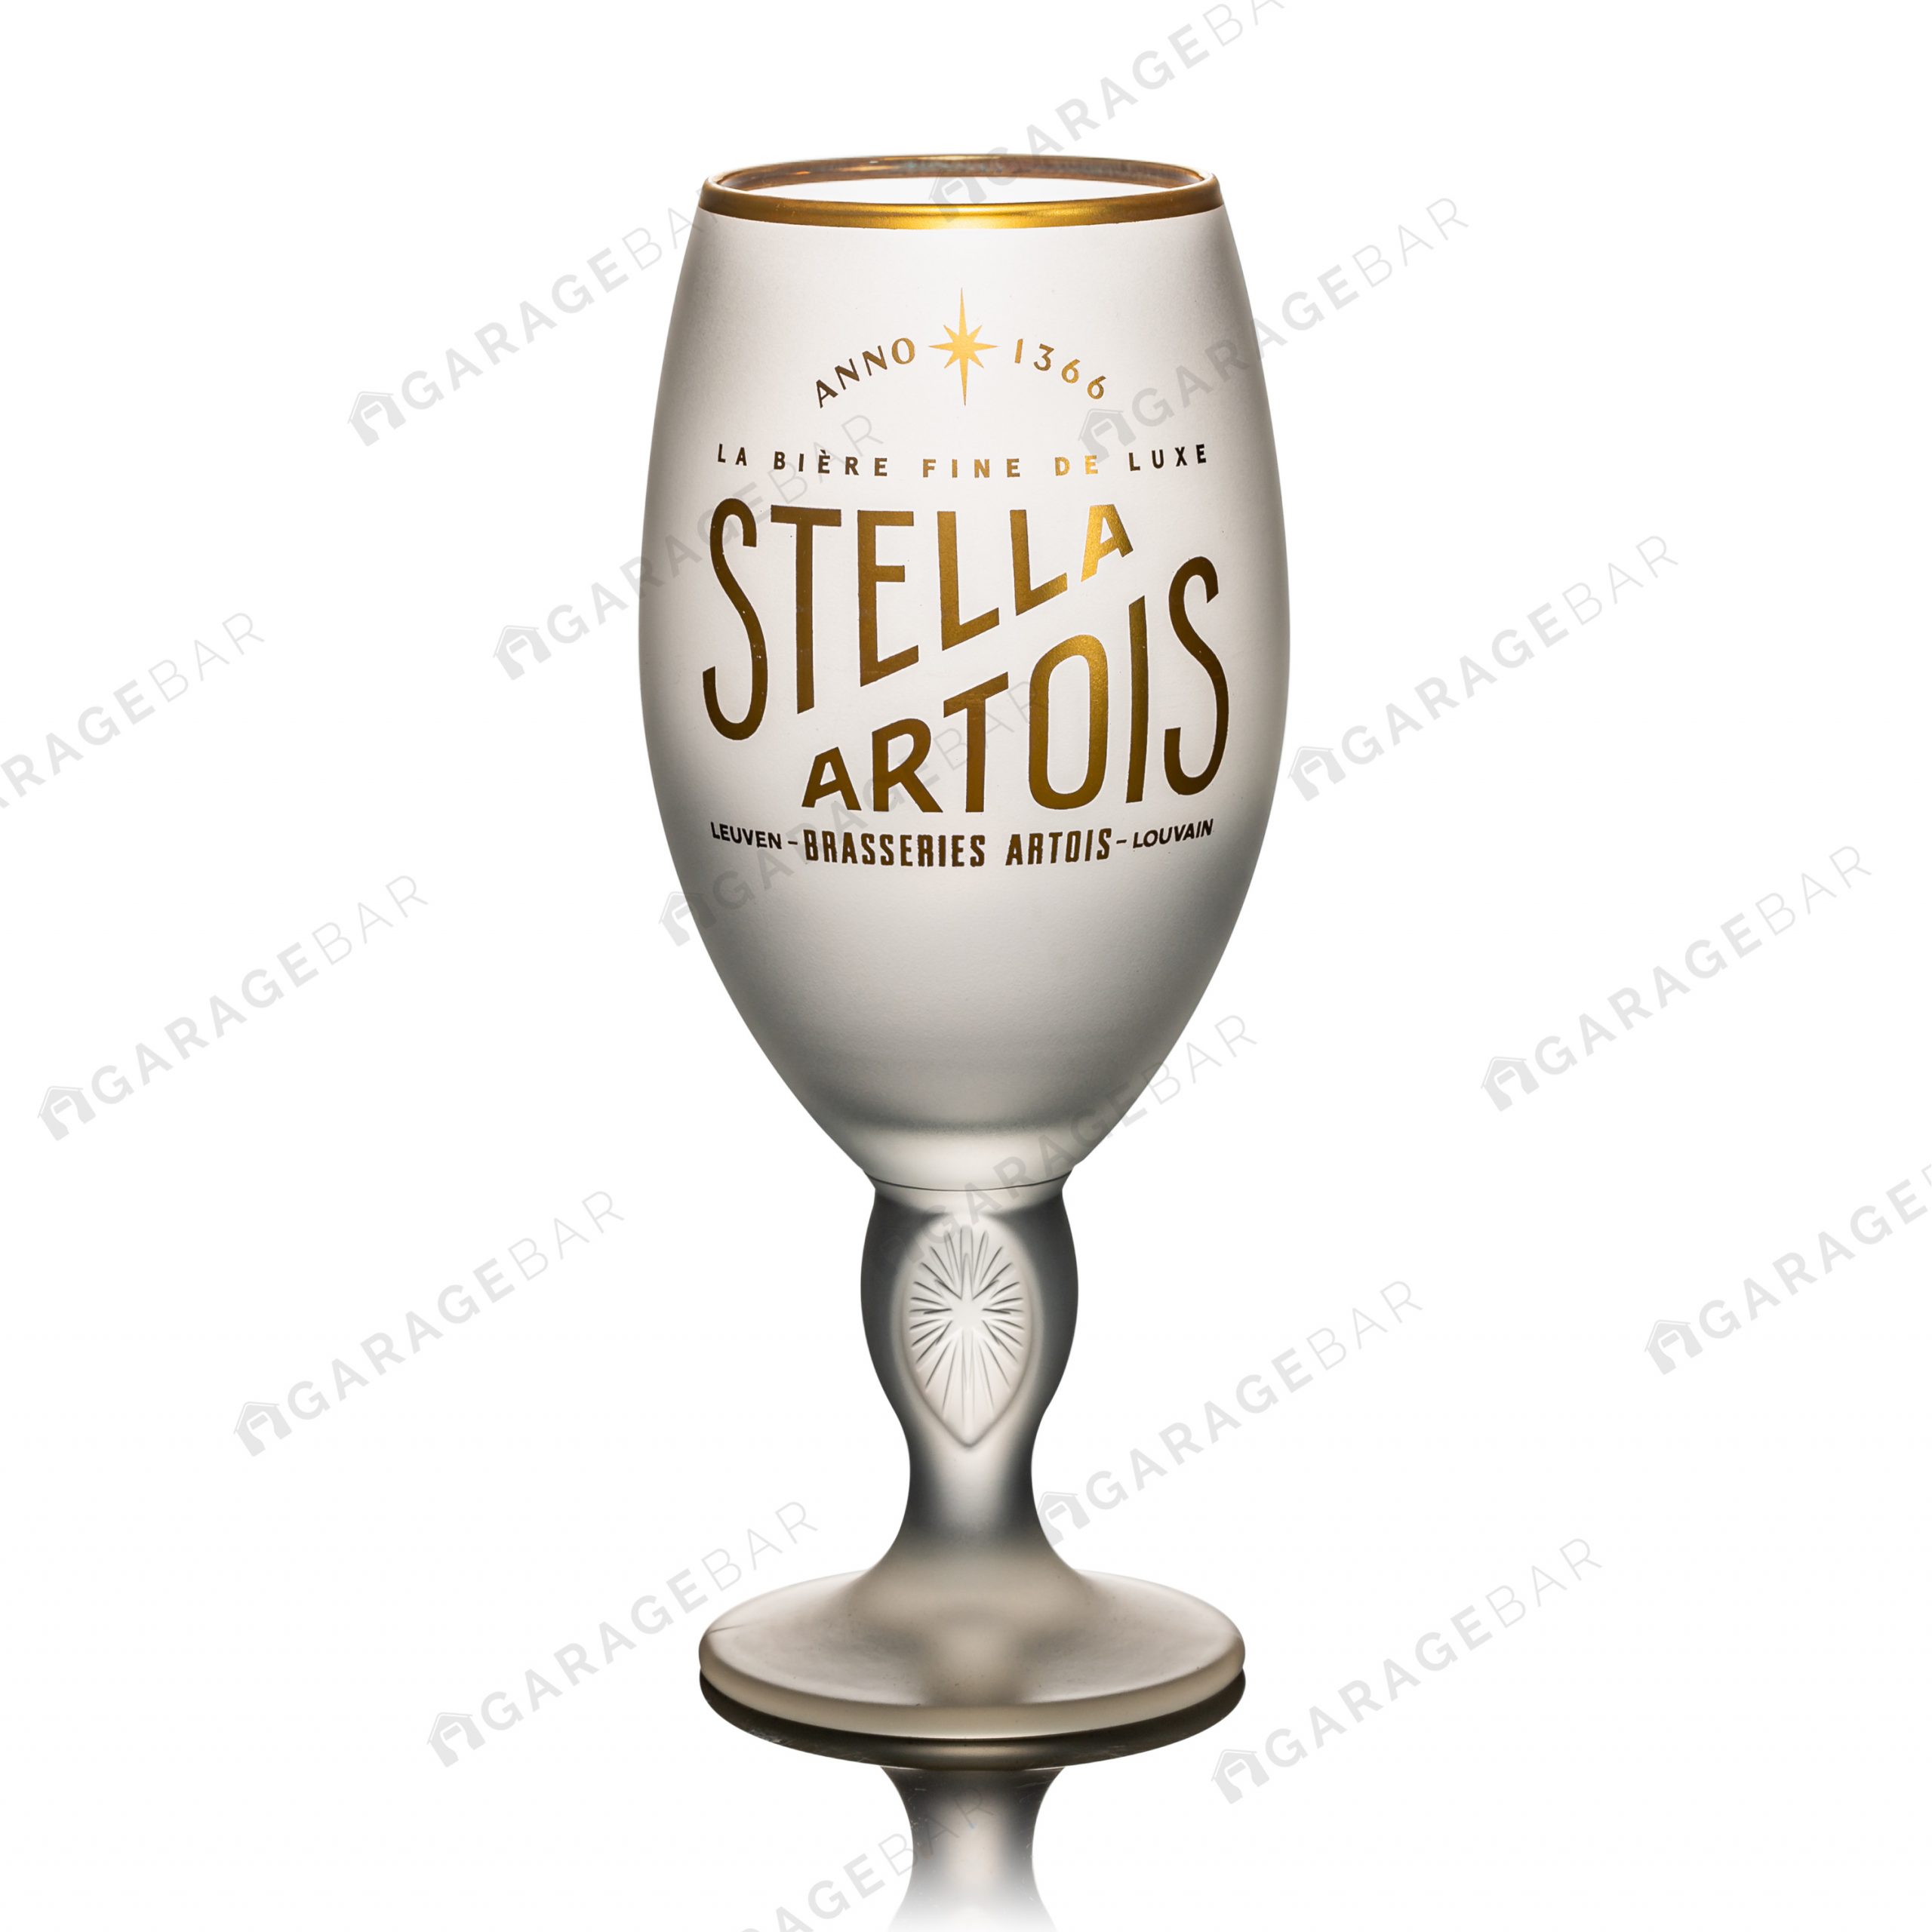 Stella Artois Belgium Beer Glasses Set 0f 12 40cl M16 0122 Chalice Gold Rim